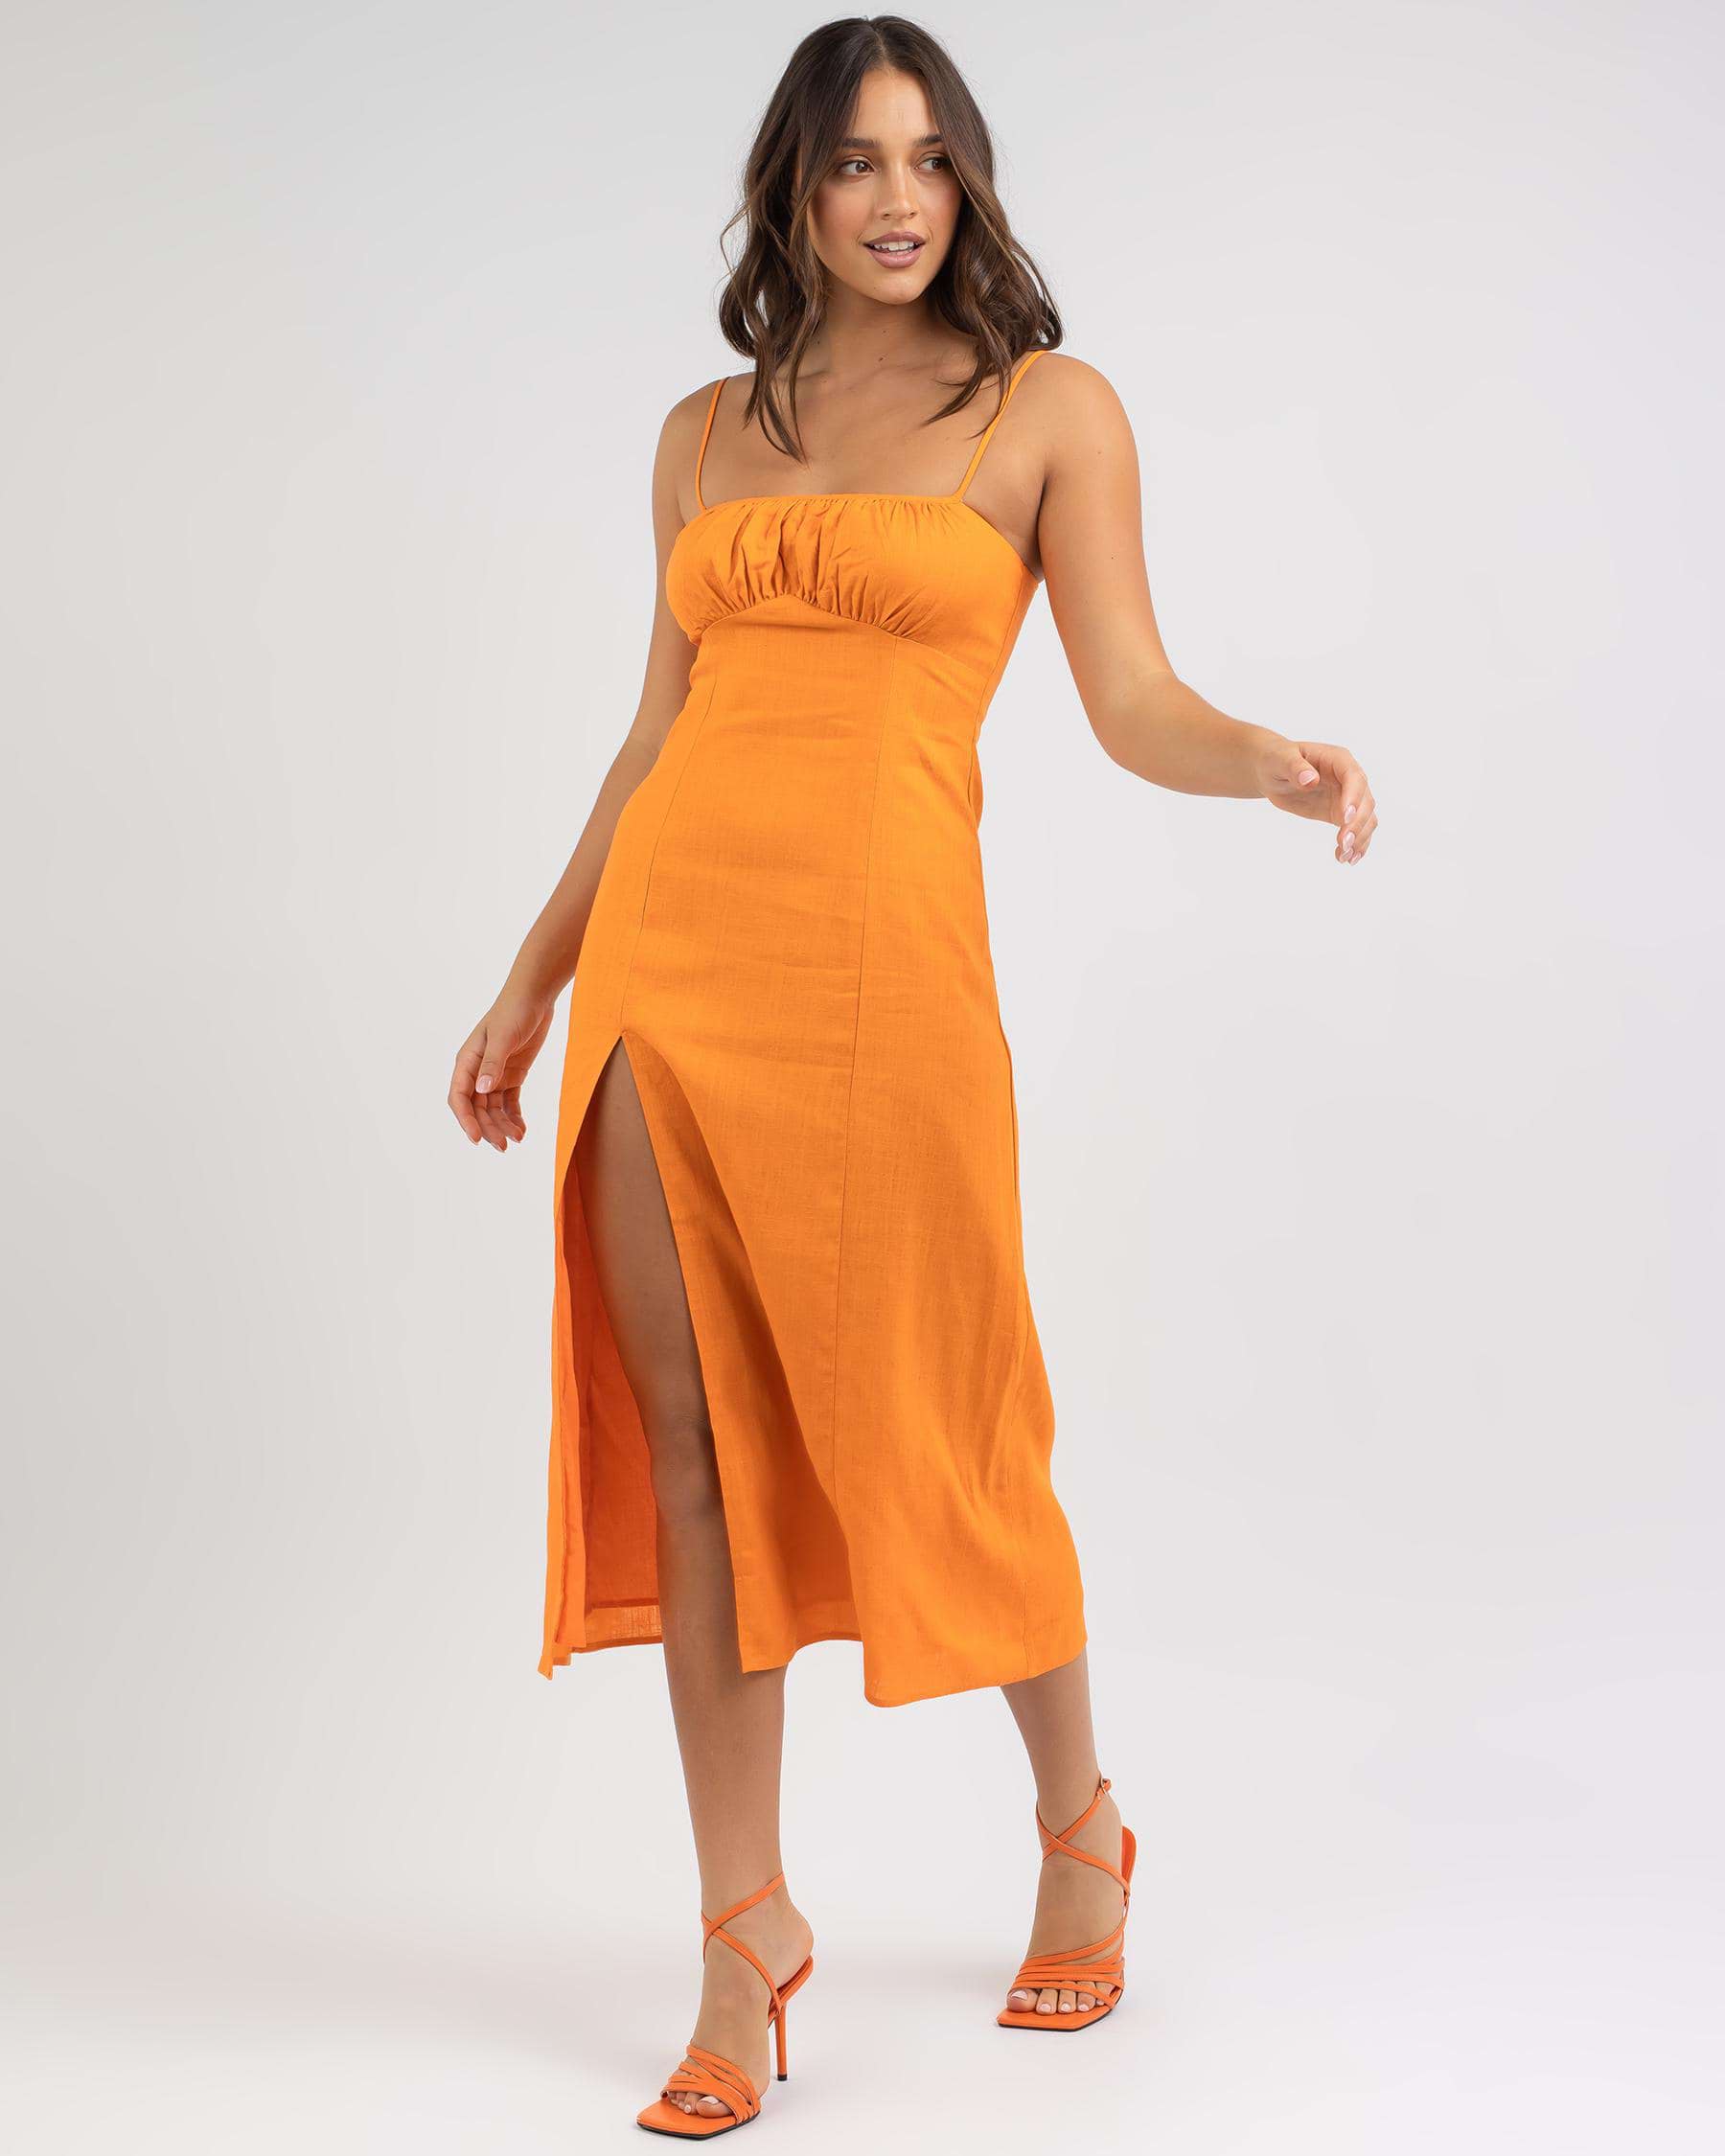 Whyte Valentyne Harlow Midi Dress In Tangerine - Fast Shipping & Easy ...